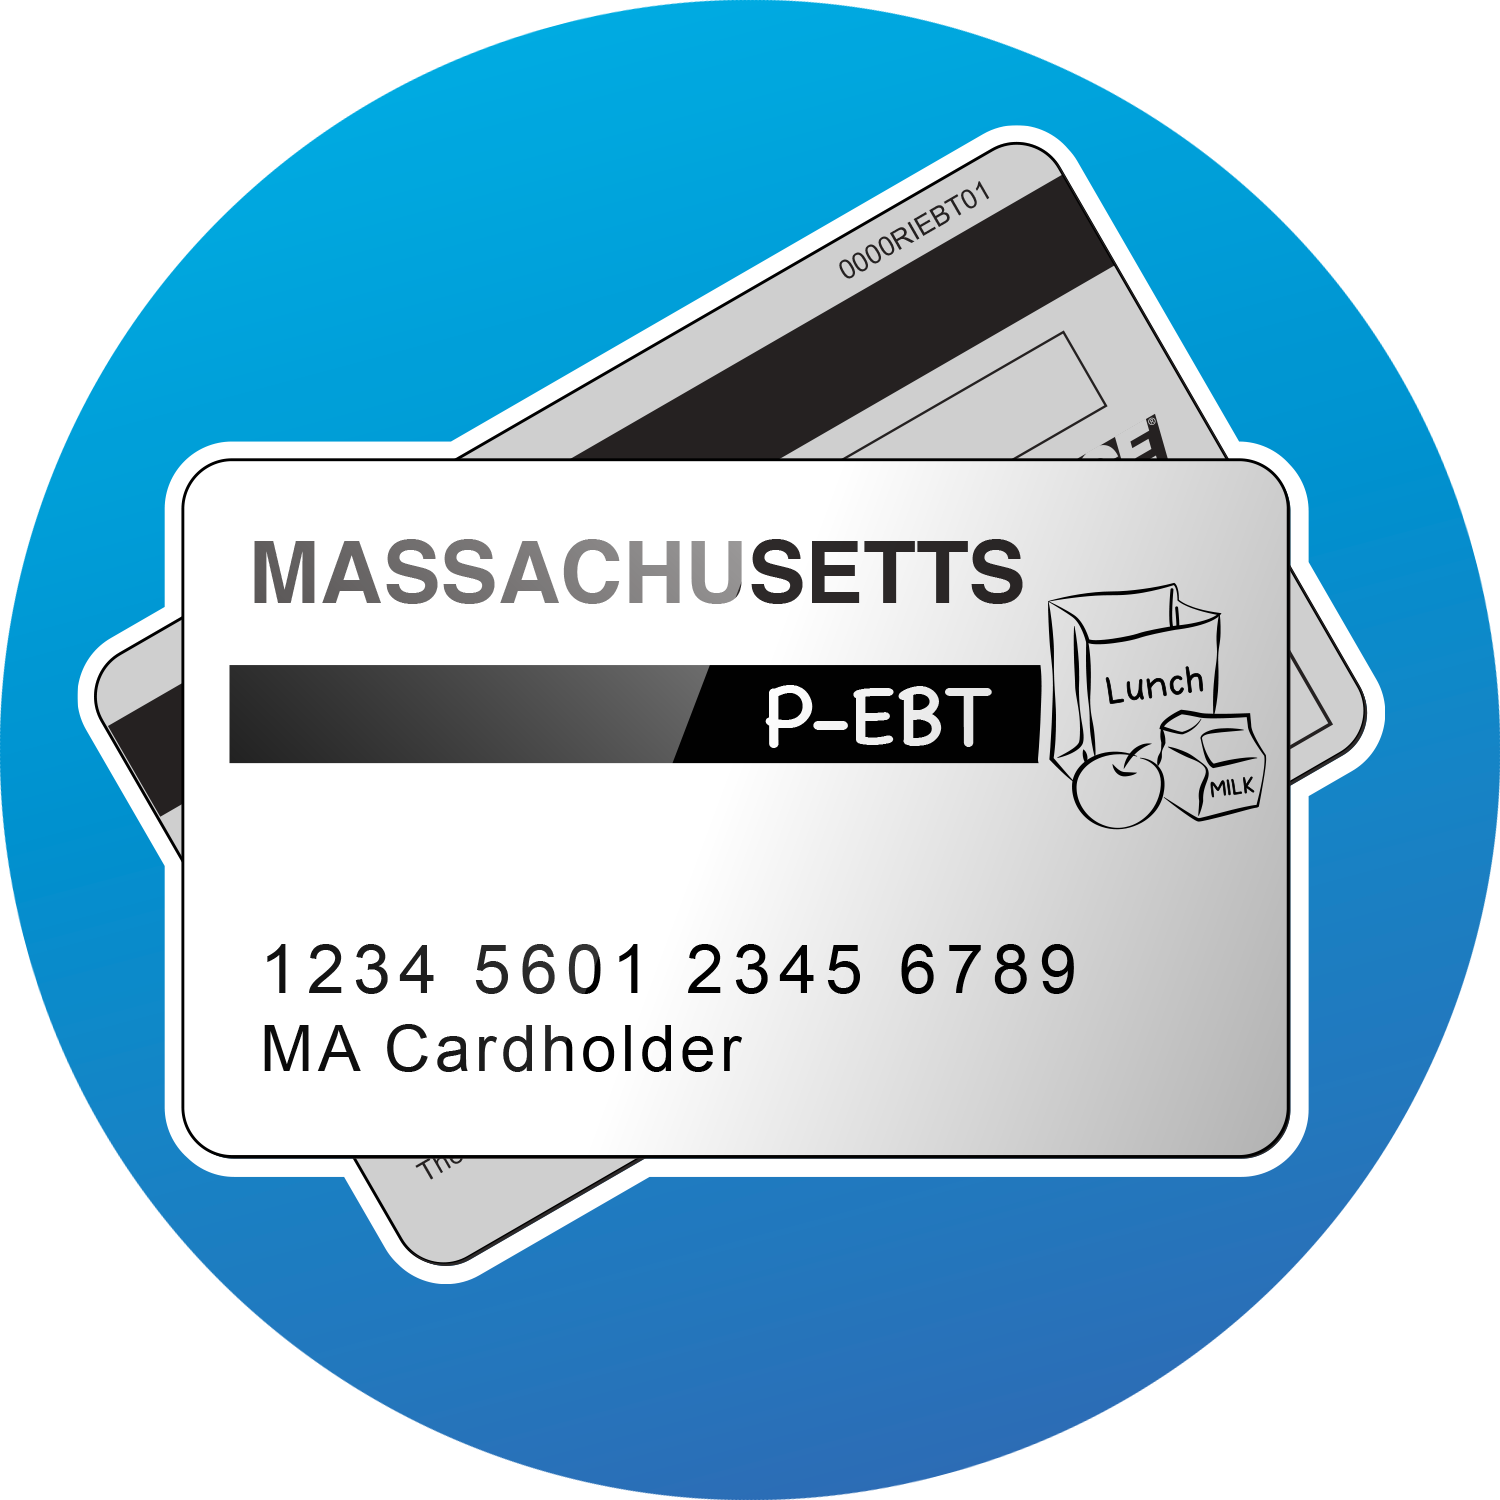 Use Your Benefits — Massachusetts P-EBT